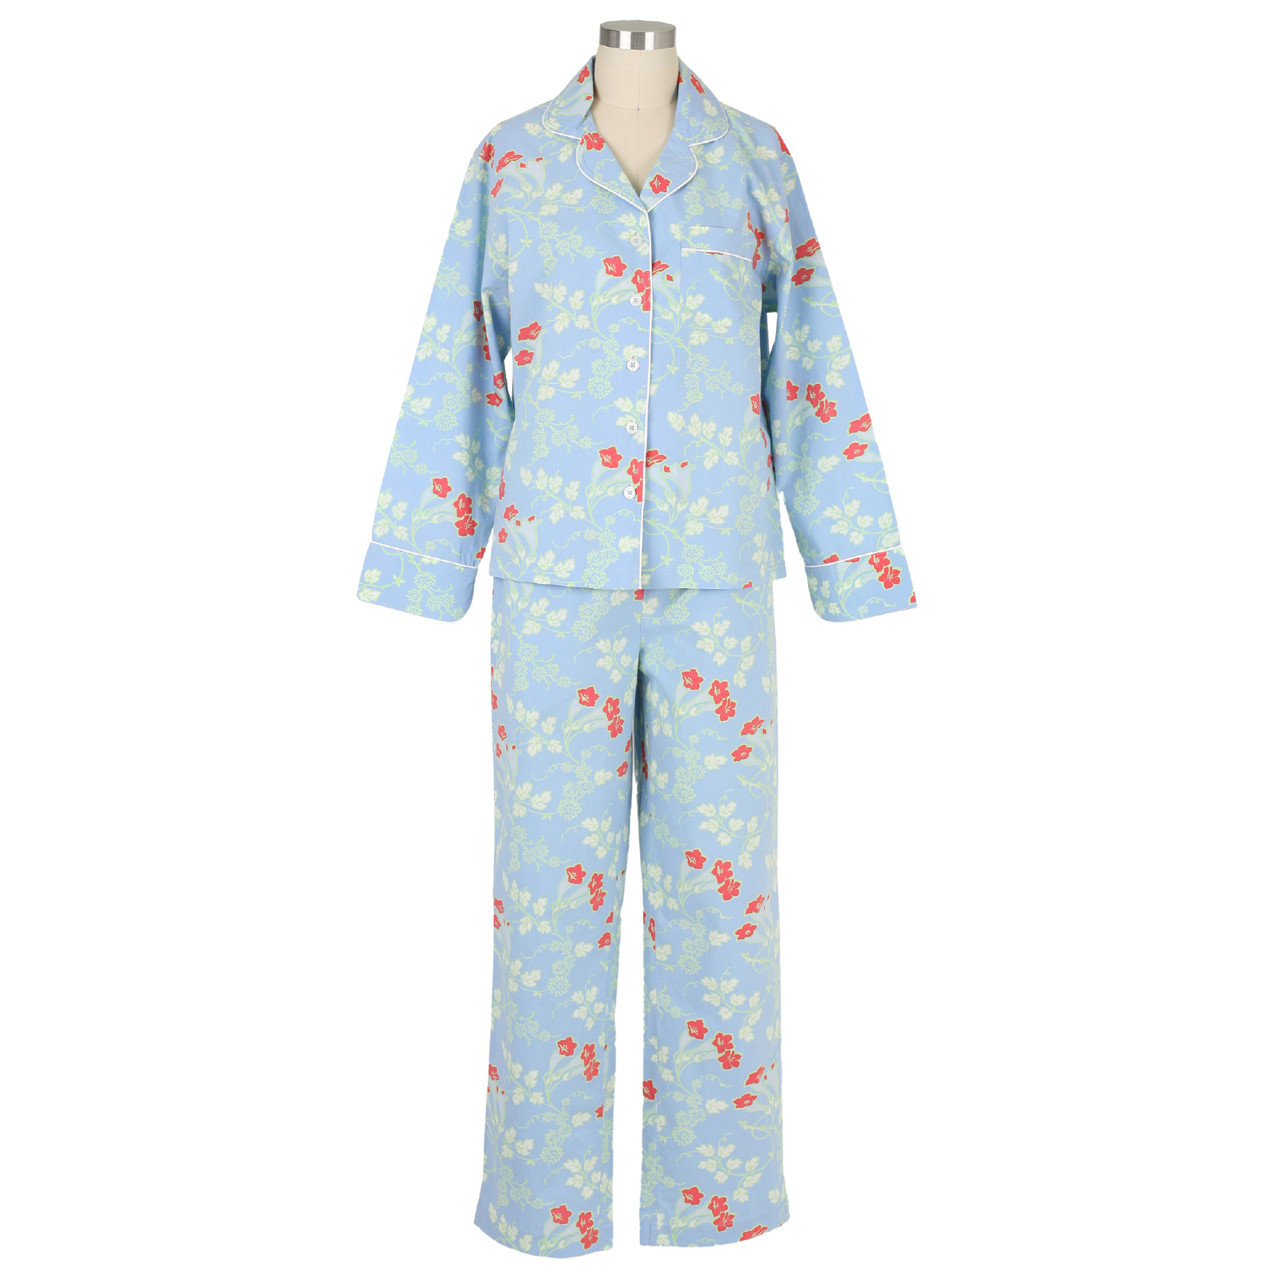 Call Button Cami Tank Woven Cotton Poplin Long PJ Set - Bedhead Pajamas